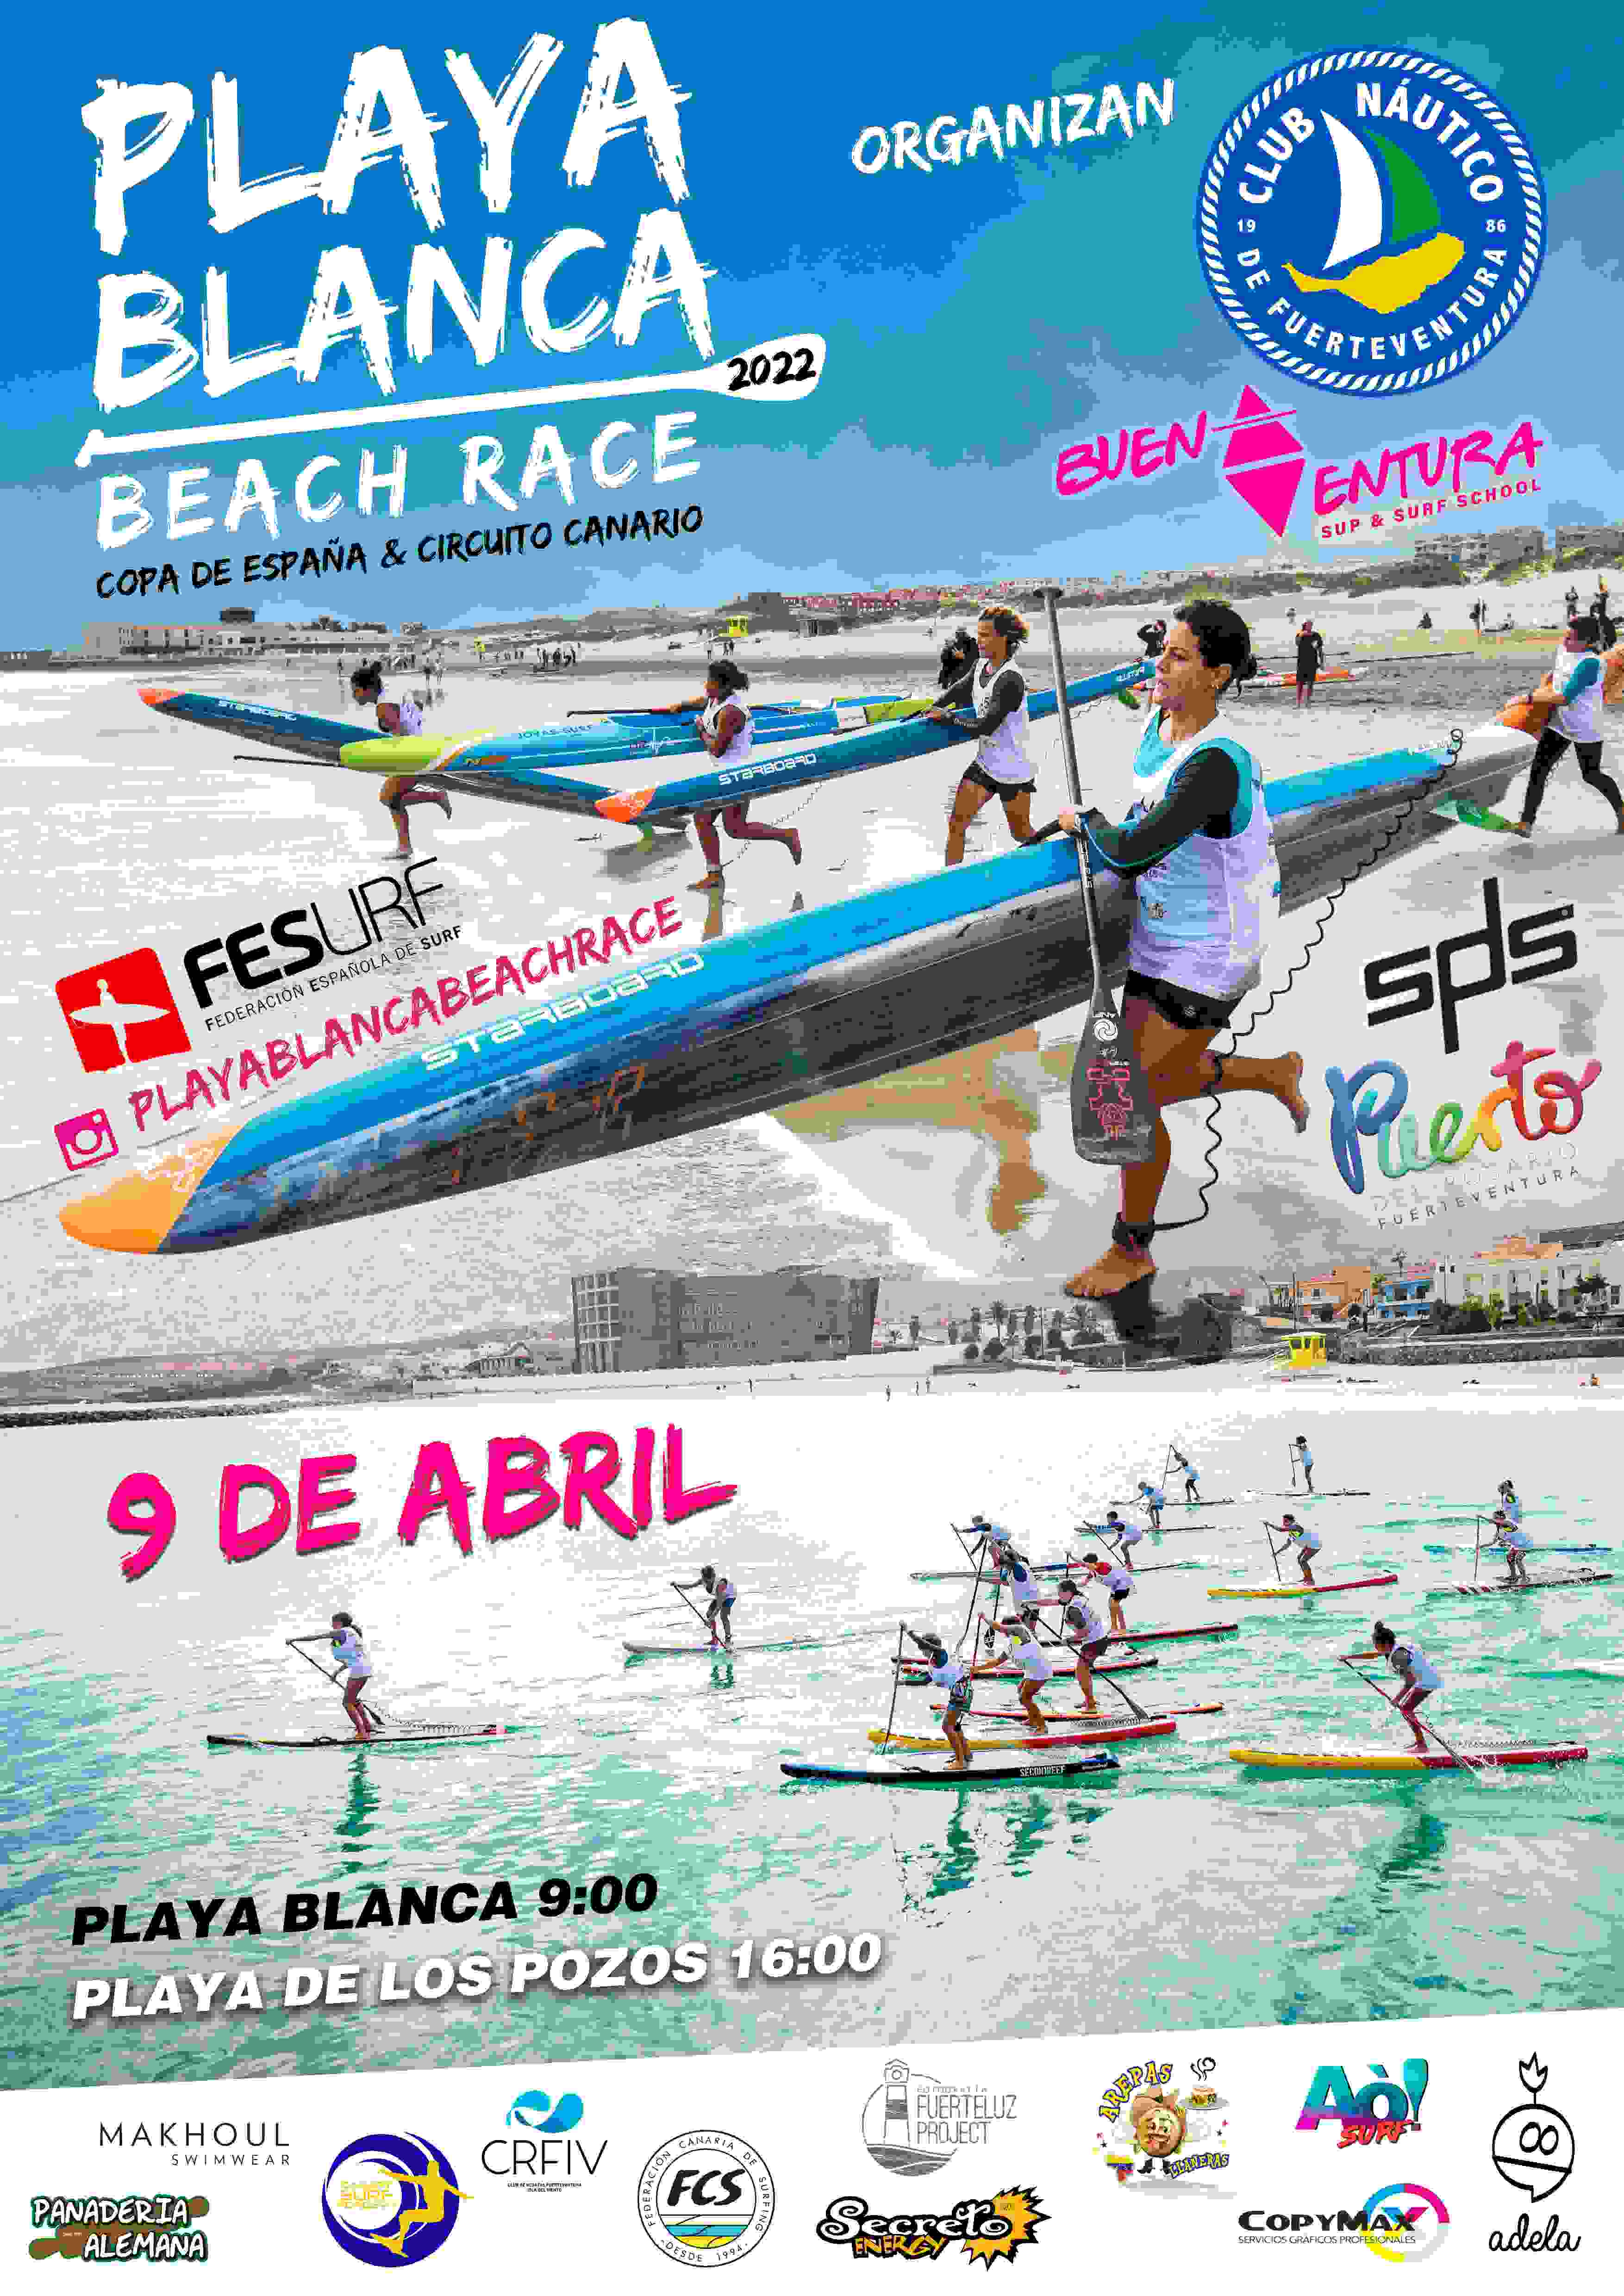 PLAYA BLANCA BEACH RACE 2022 - NO FEDERADOS FEDERADOS PENINSULARES - Inscríbete